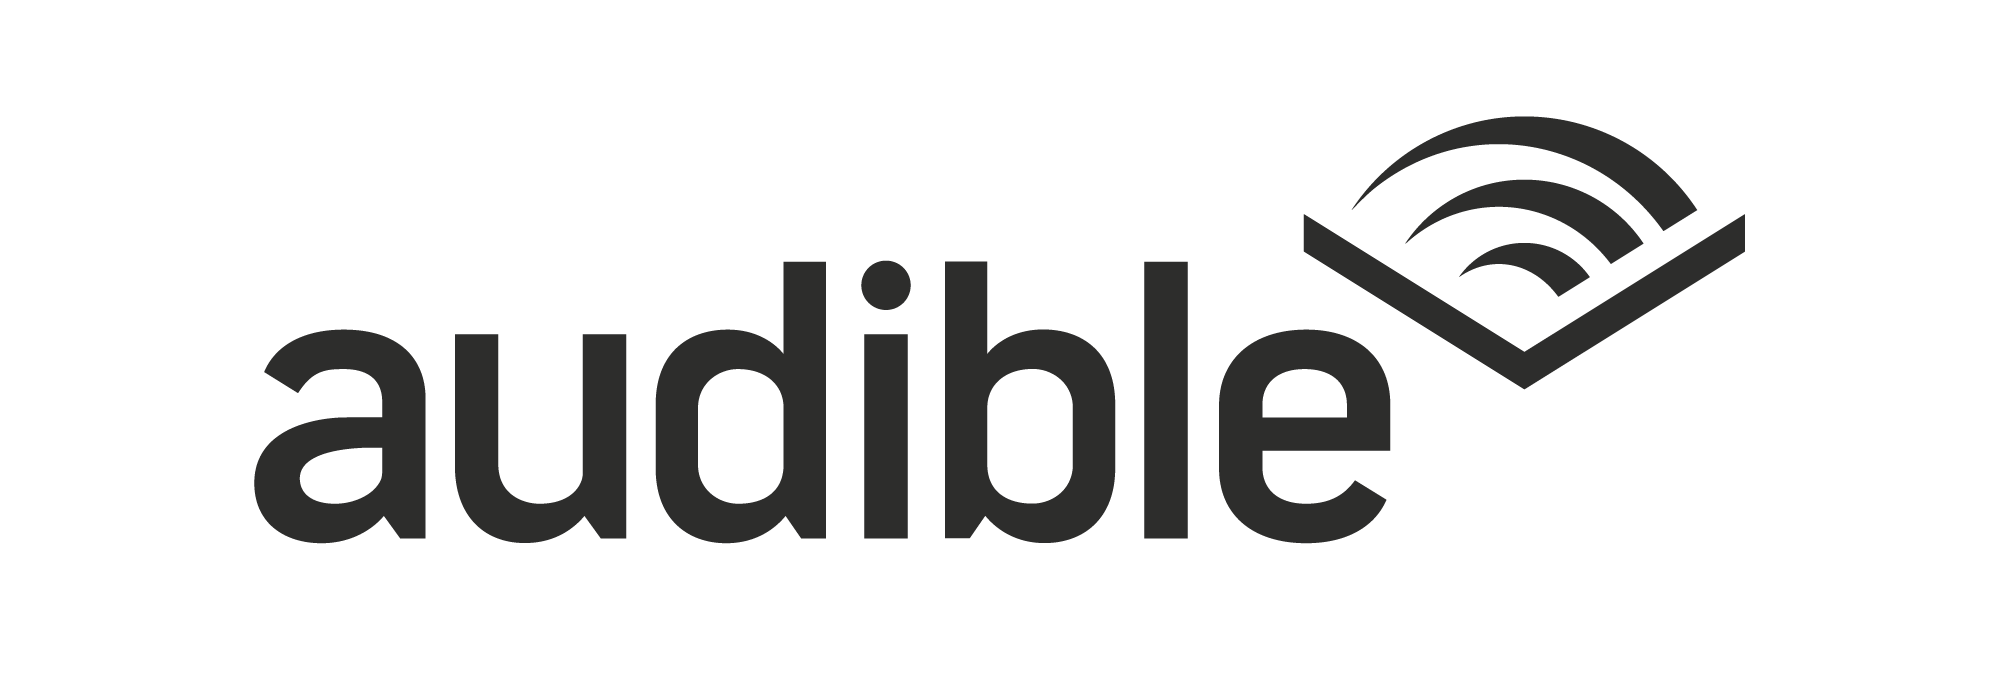 Audible Logo Bw